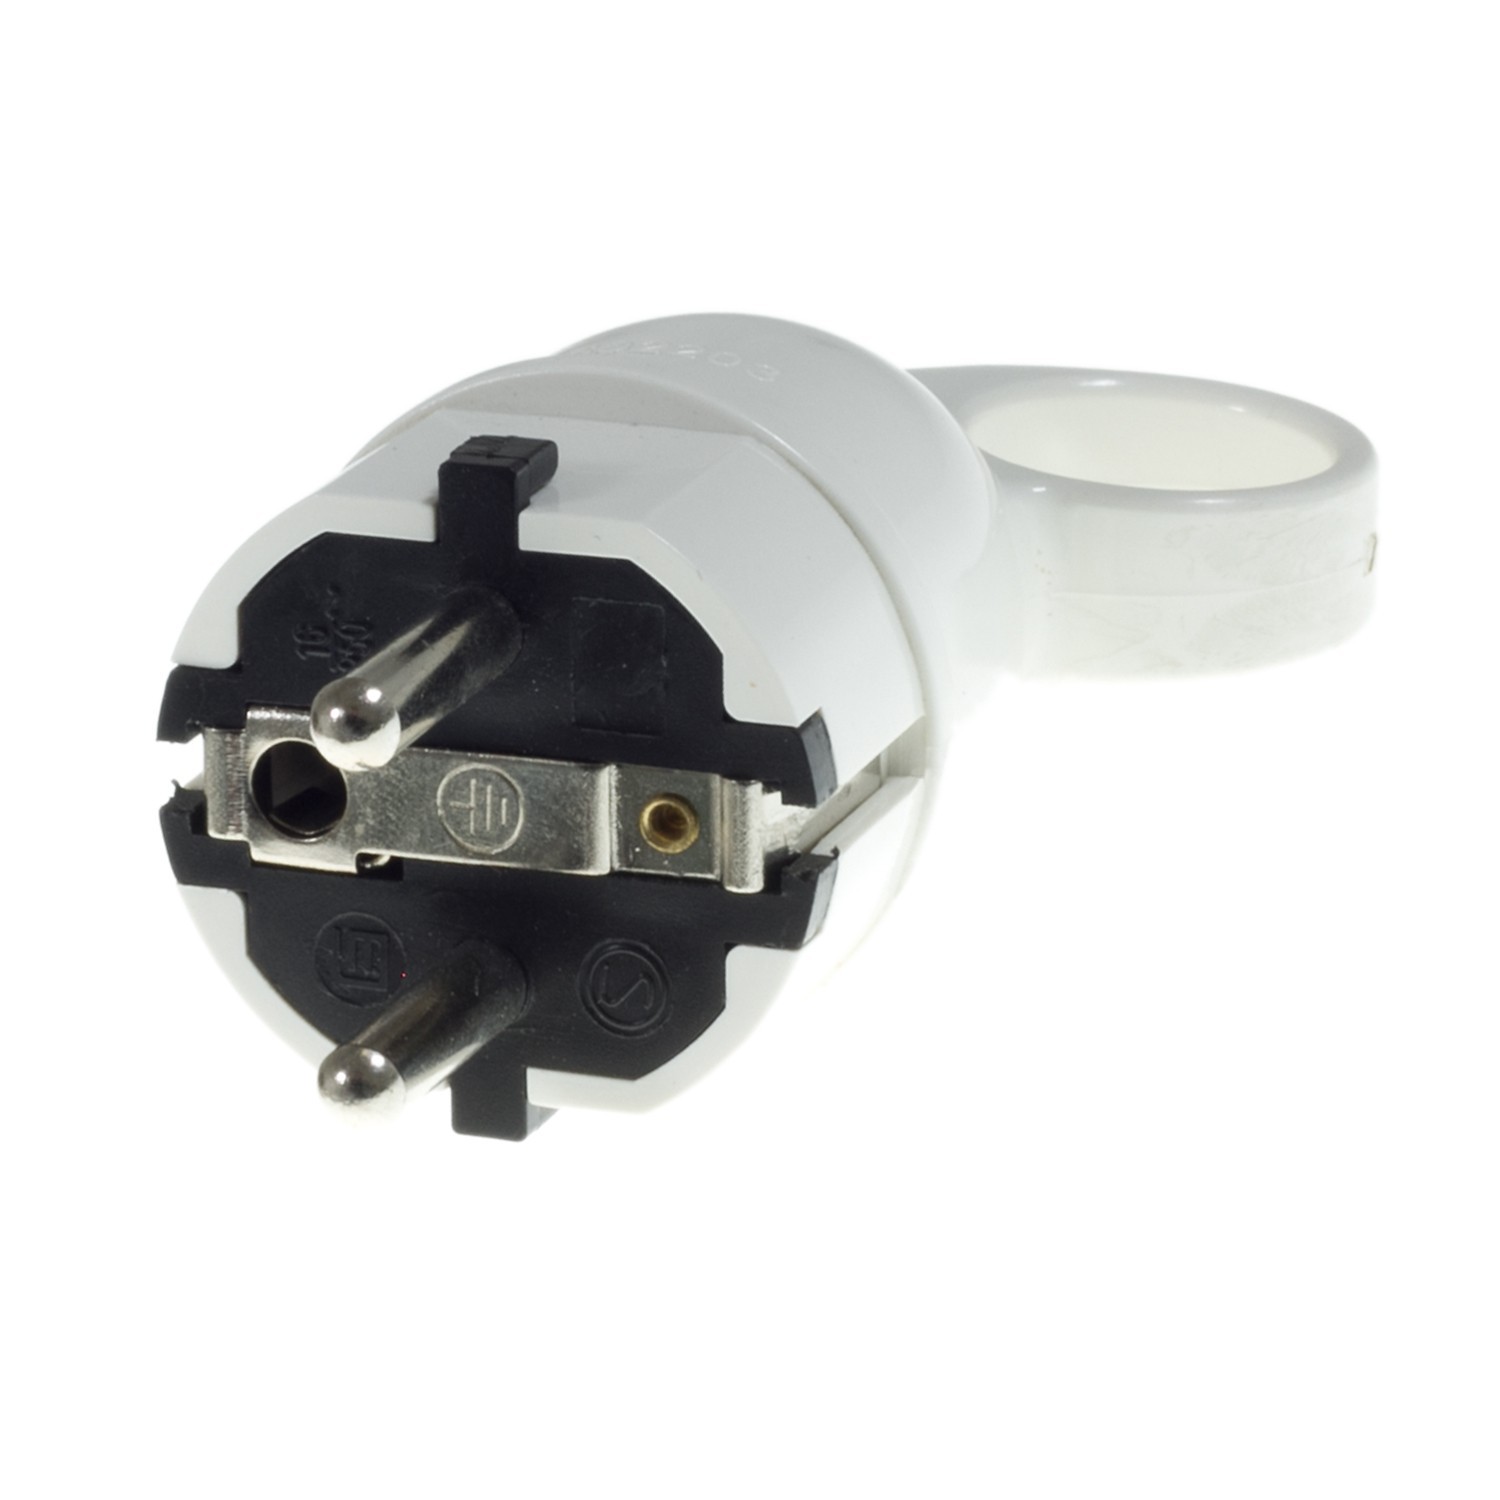 Schuko comfort 16A 250V plug with ring